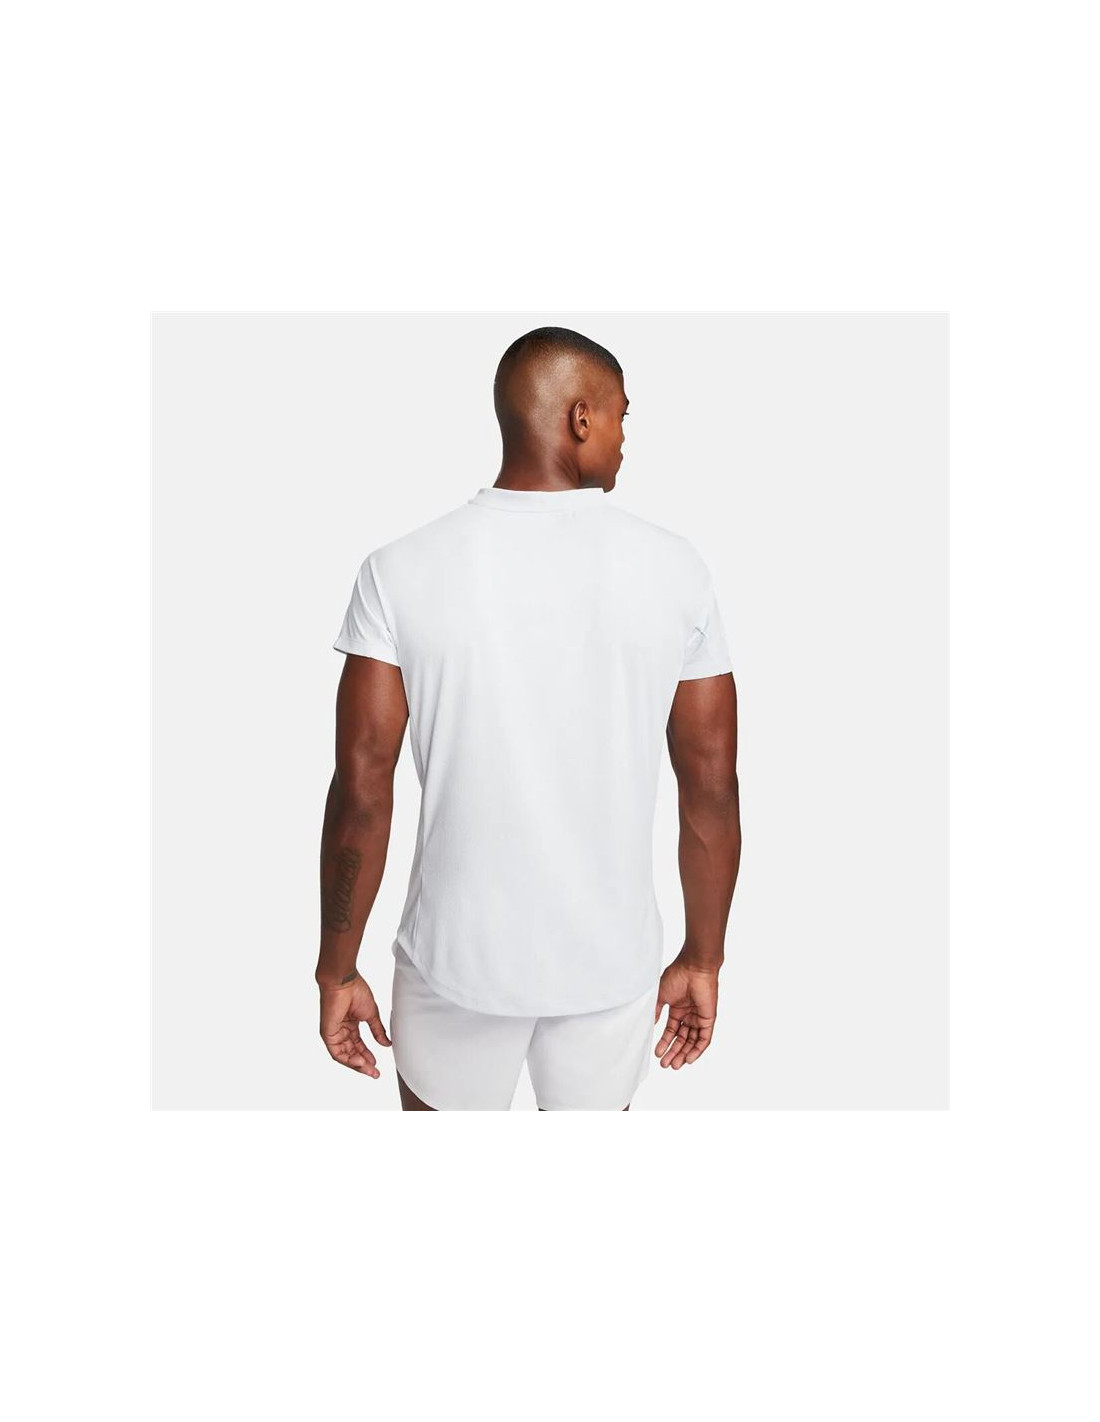 Nike Rafa - Blanco - Camiseta Tenis Hombre talla M